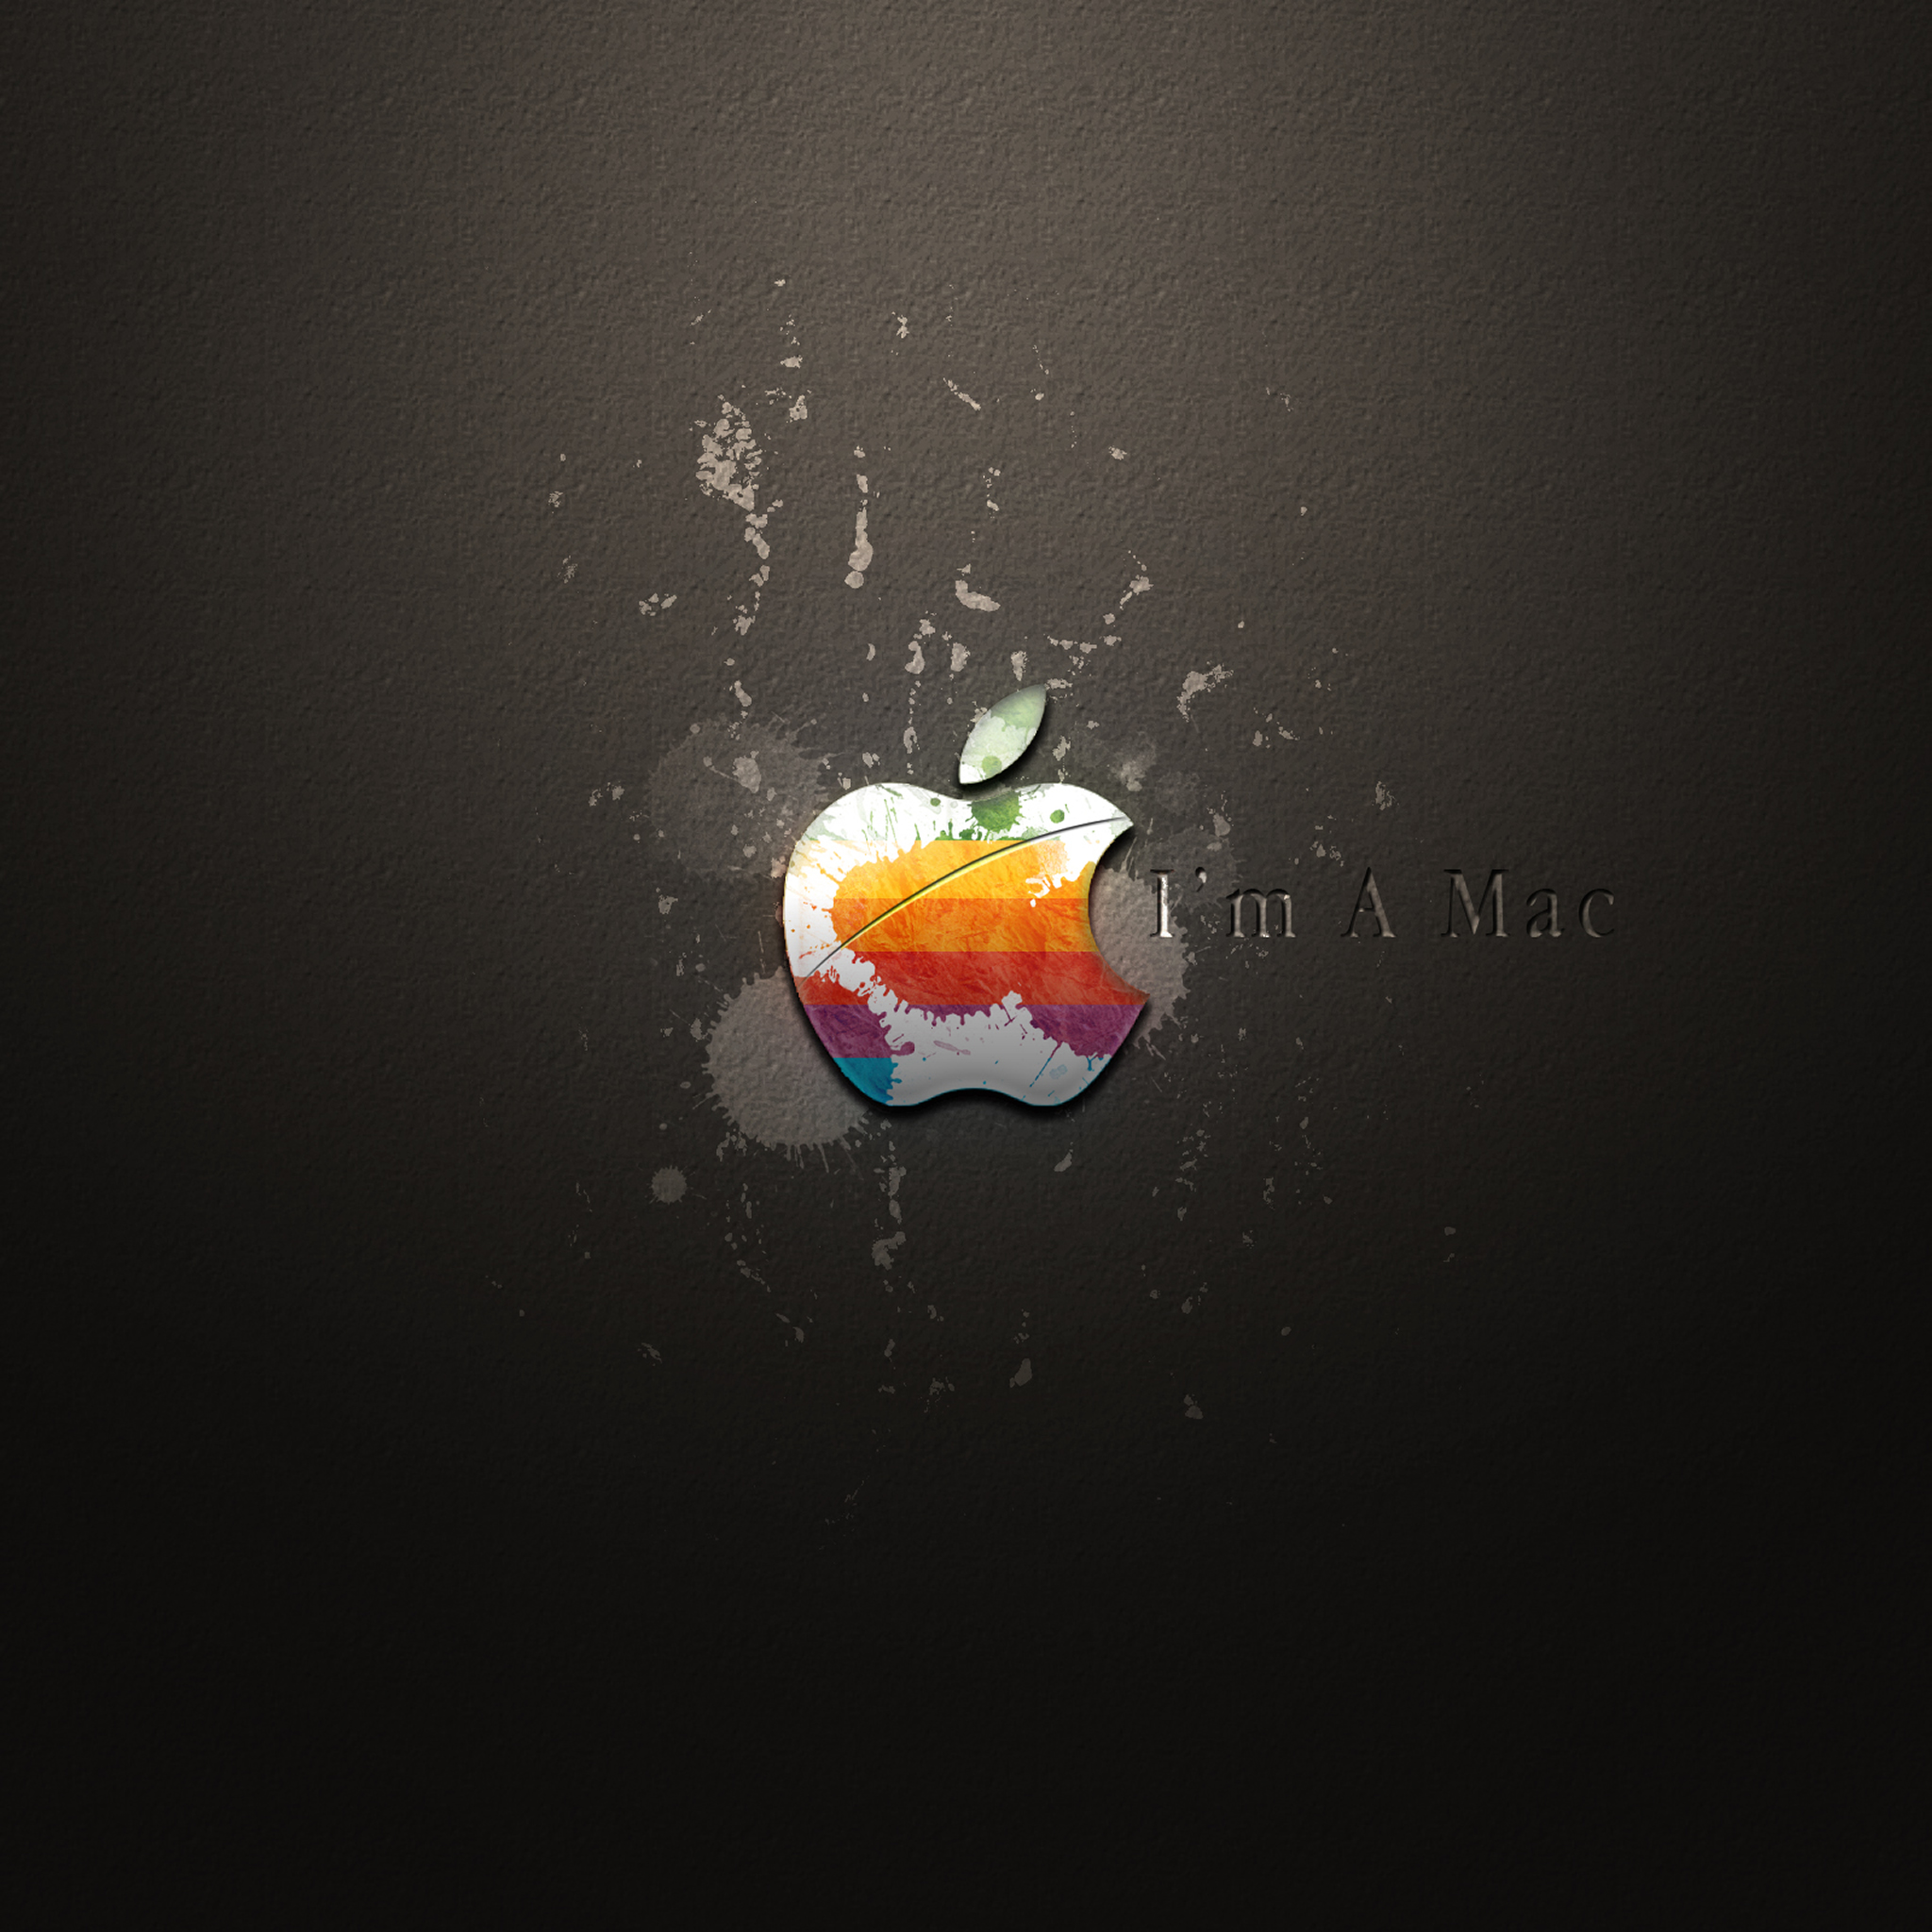 Today S New iPad Wallpaper HD